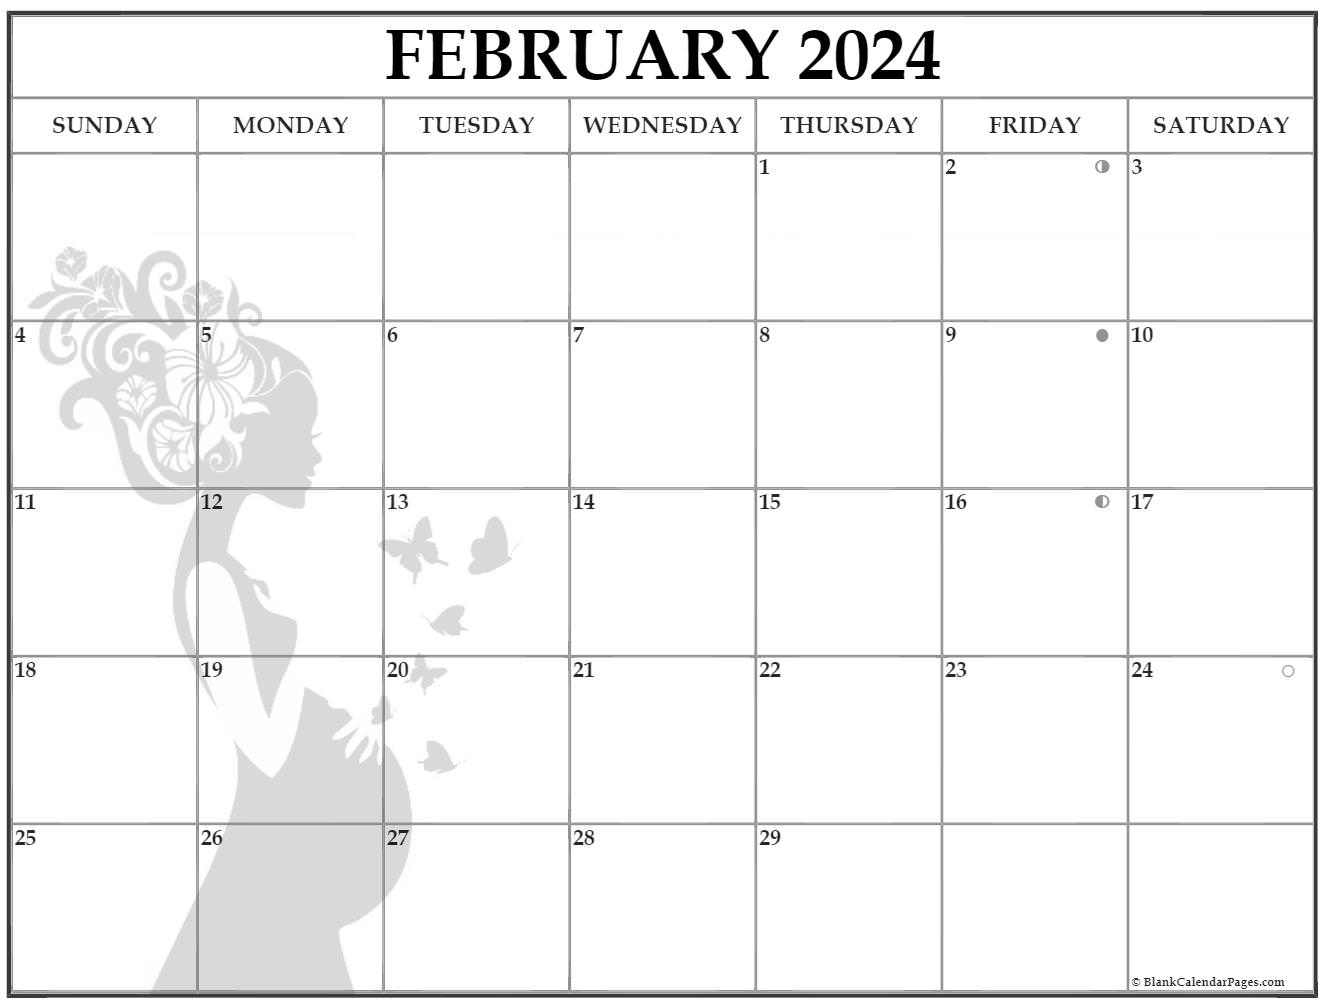 February 2022 Pregnancy Calendar Fertility Calendar